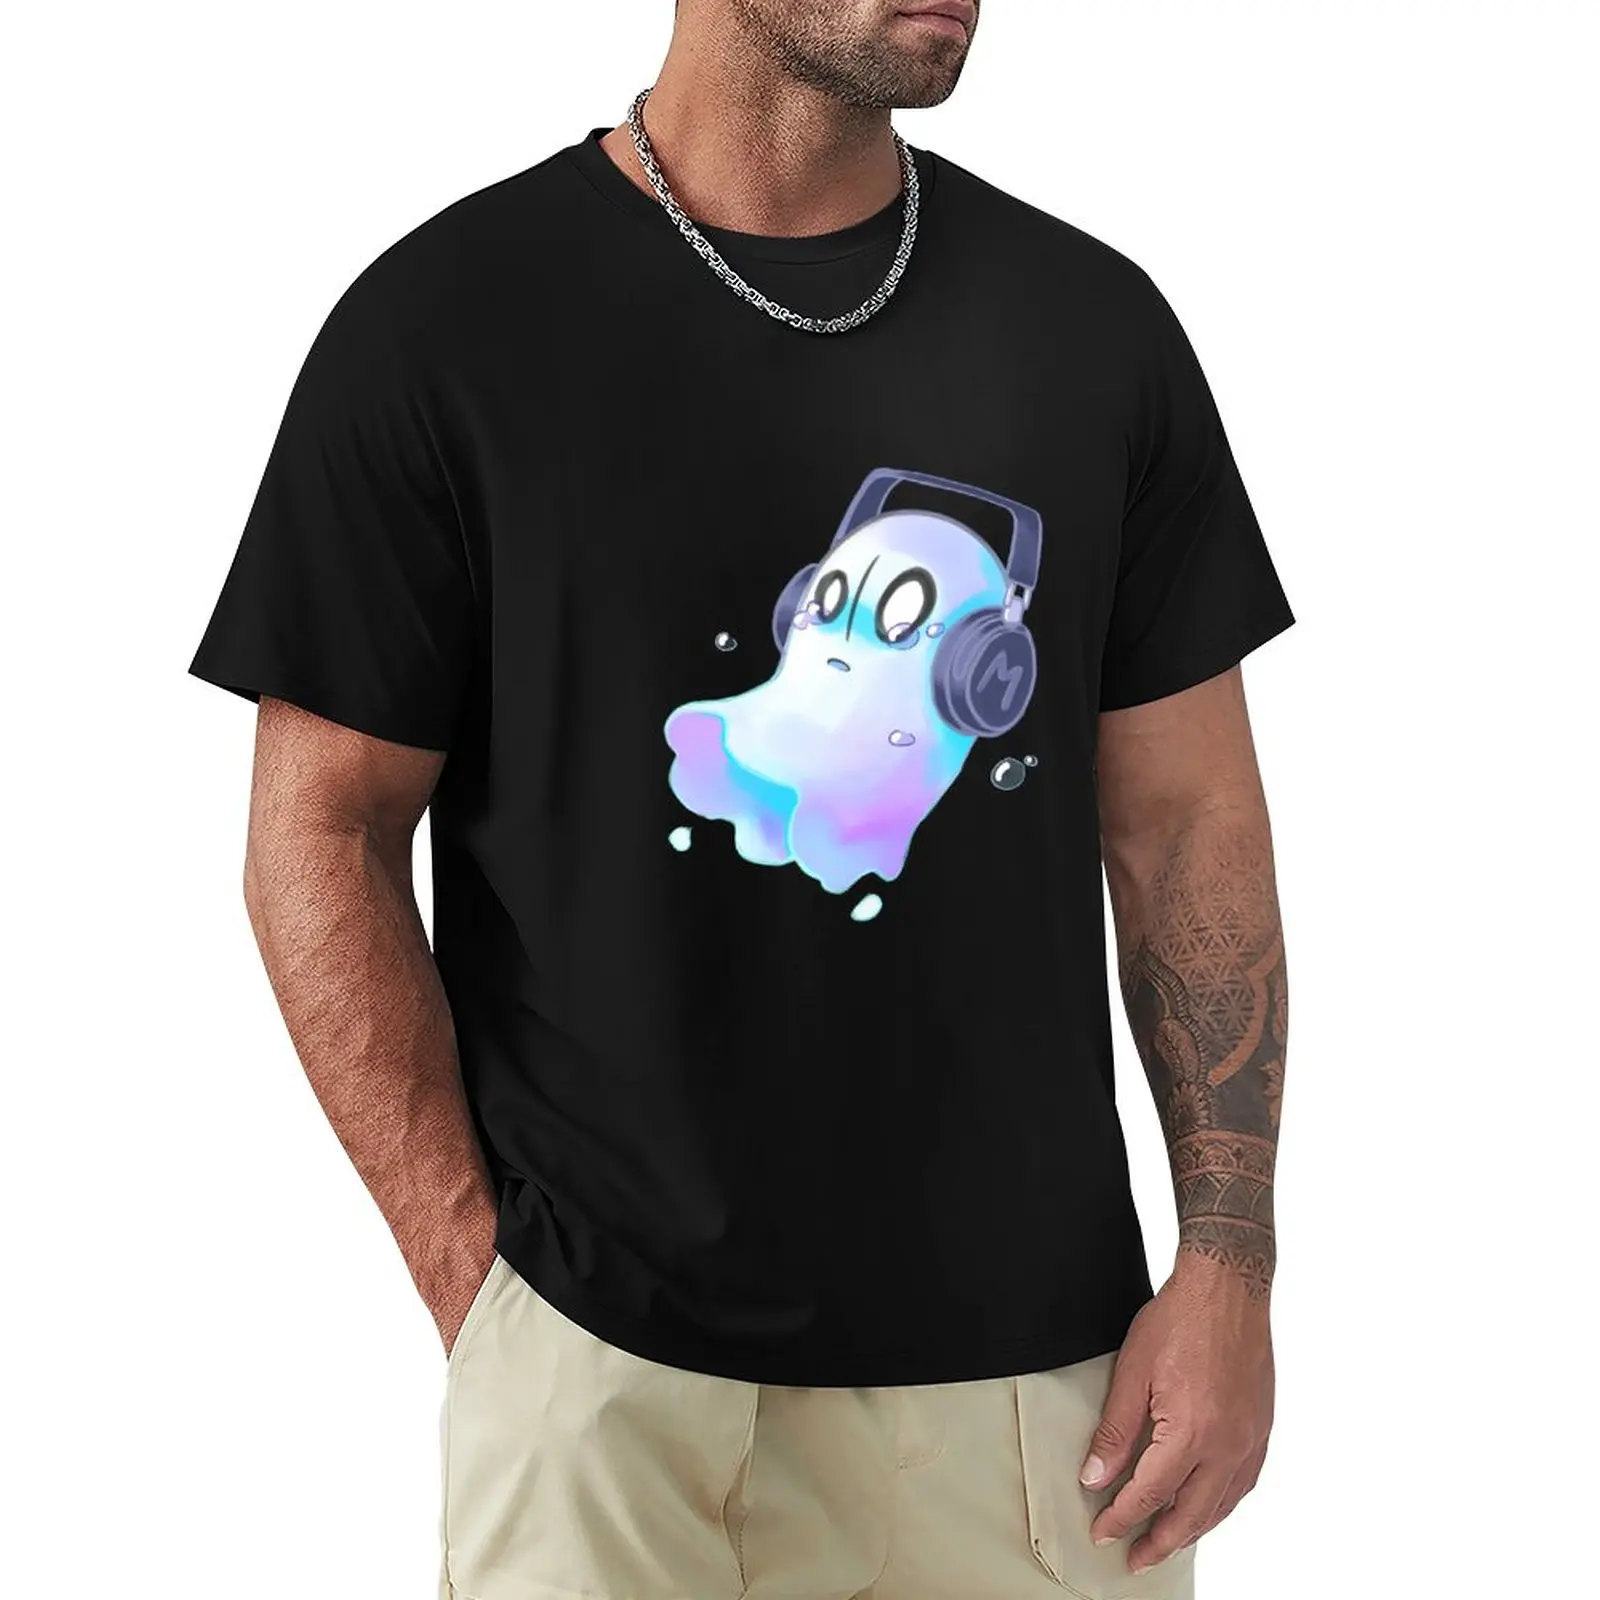 Napstablook 소년 동물 프린트 티셔츠, 짧은 블라우스, 남성 그래픽 티셔츠, 재미있는 동물 프린트 셔츠